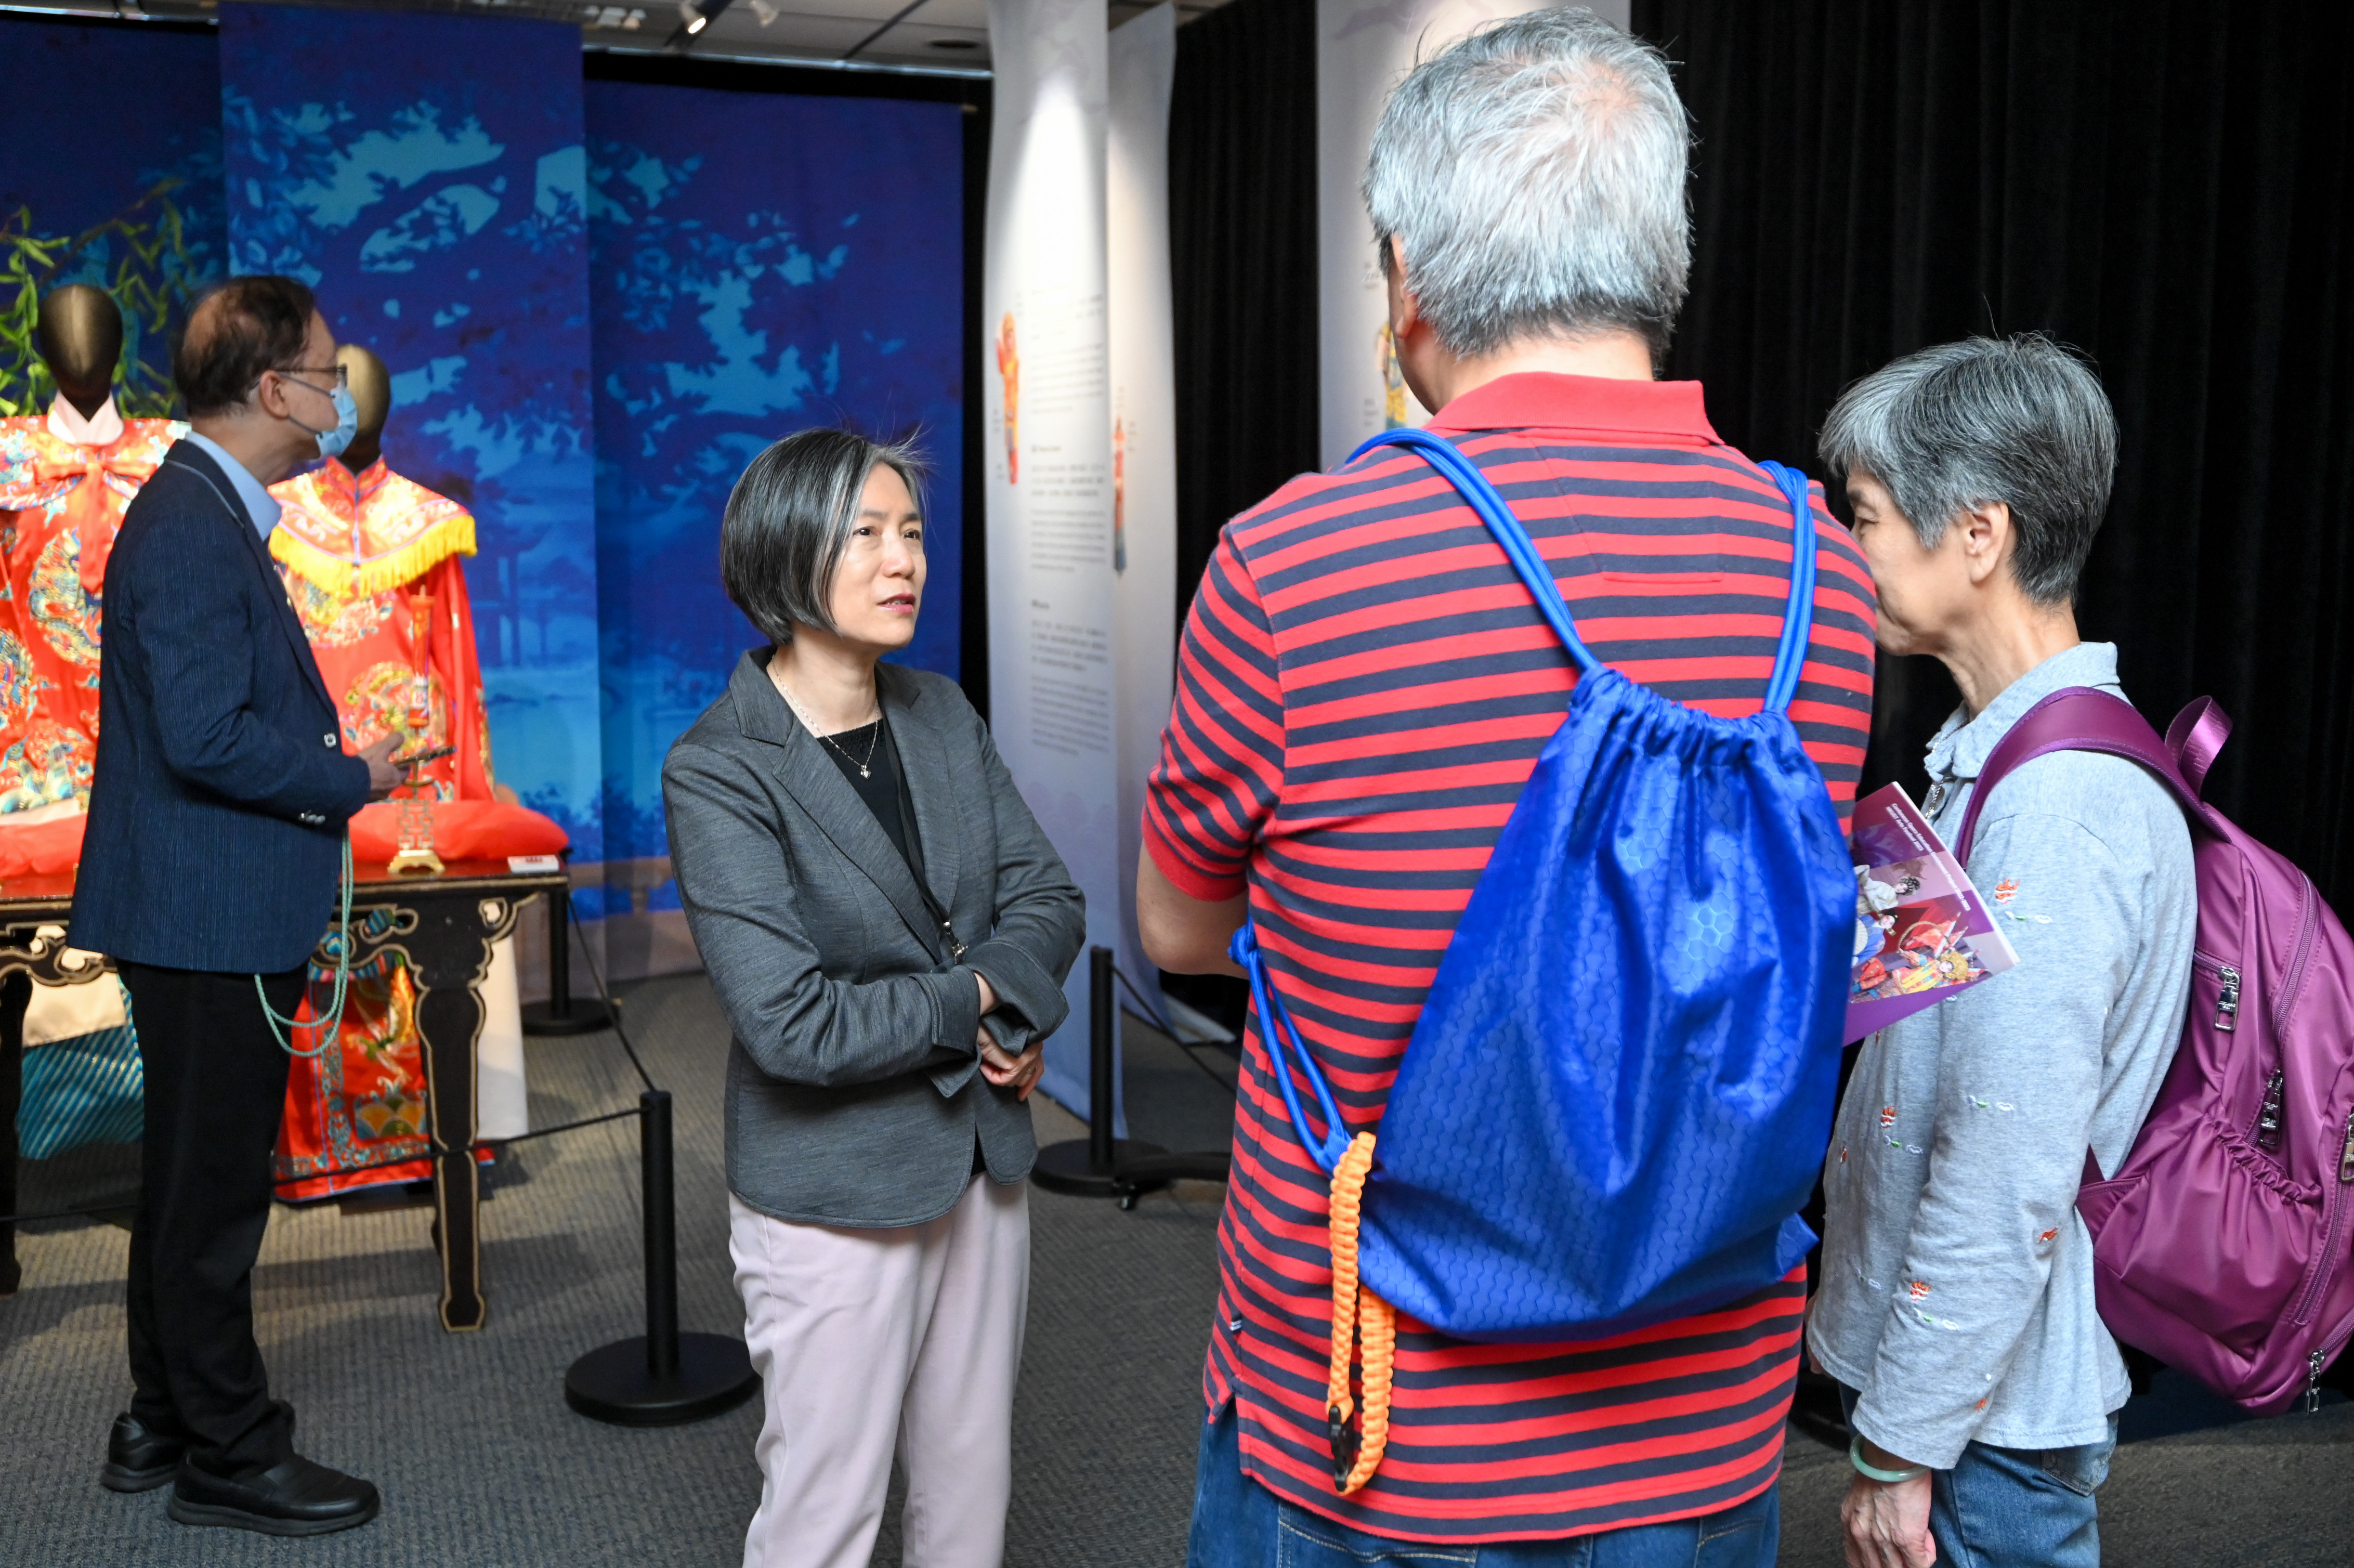 Cantonese exhibition 